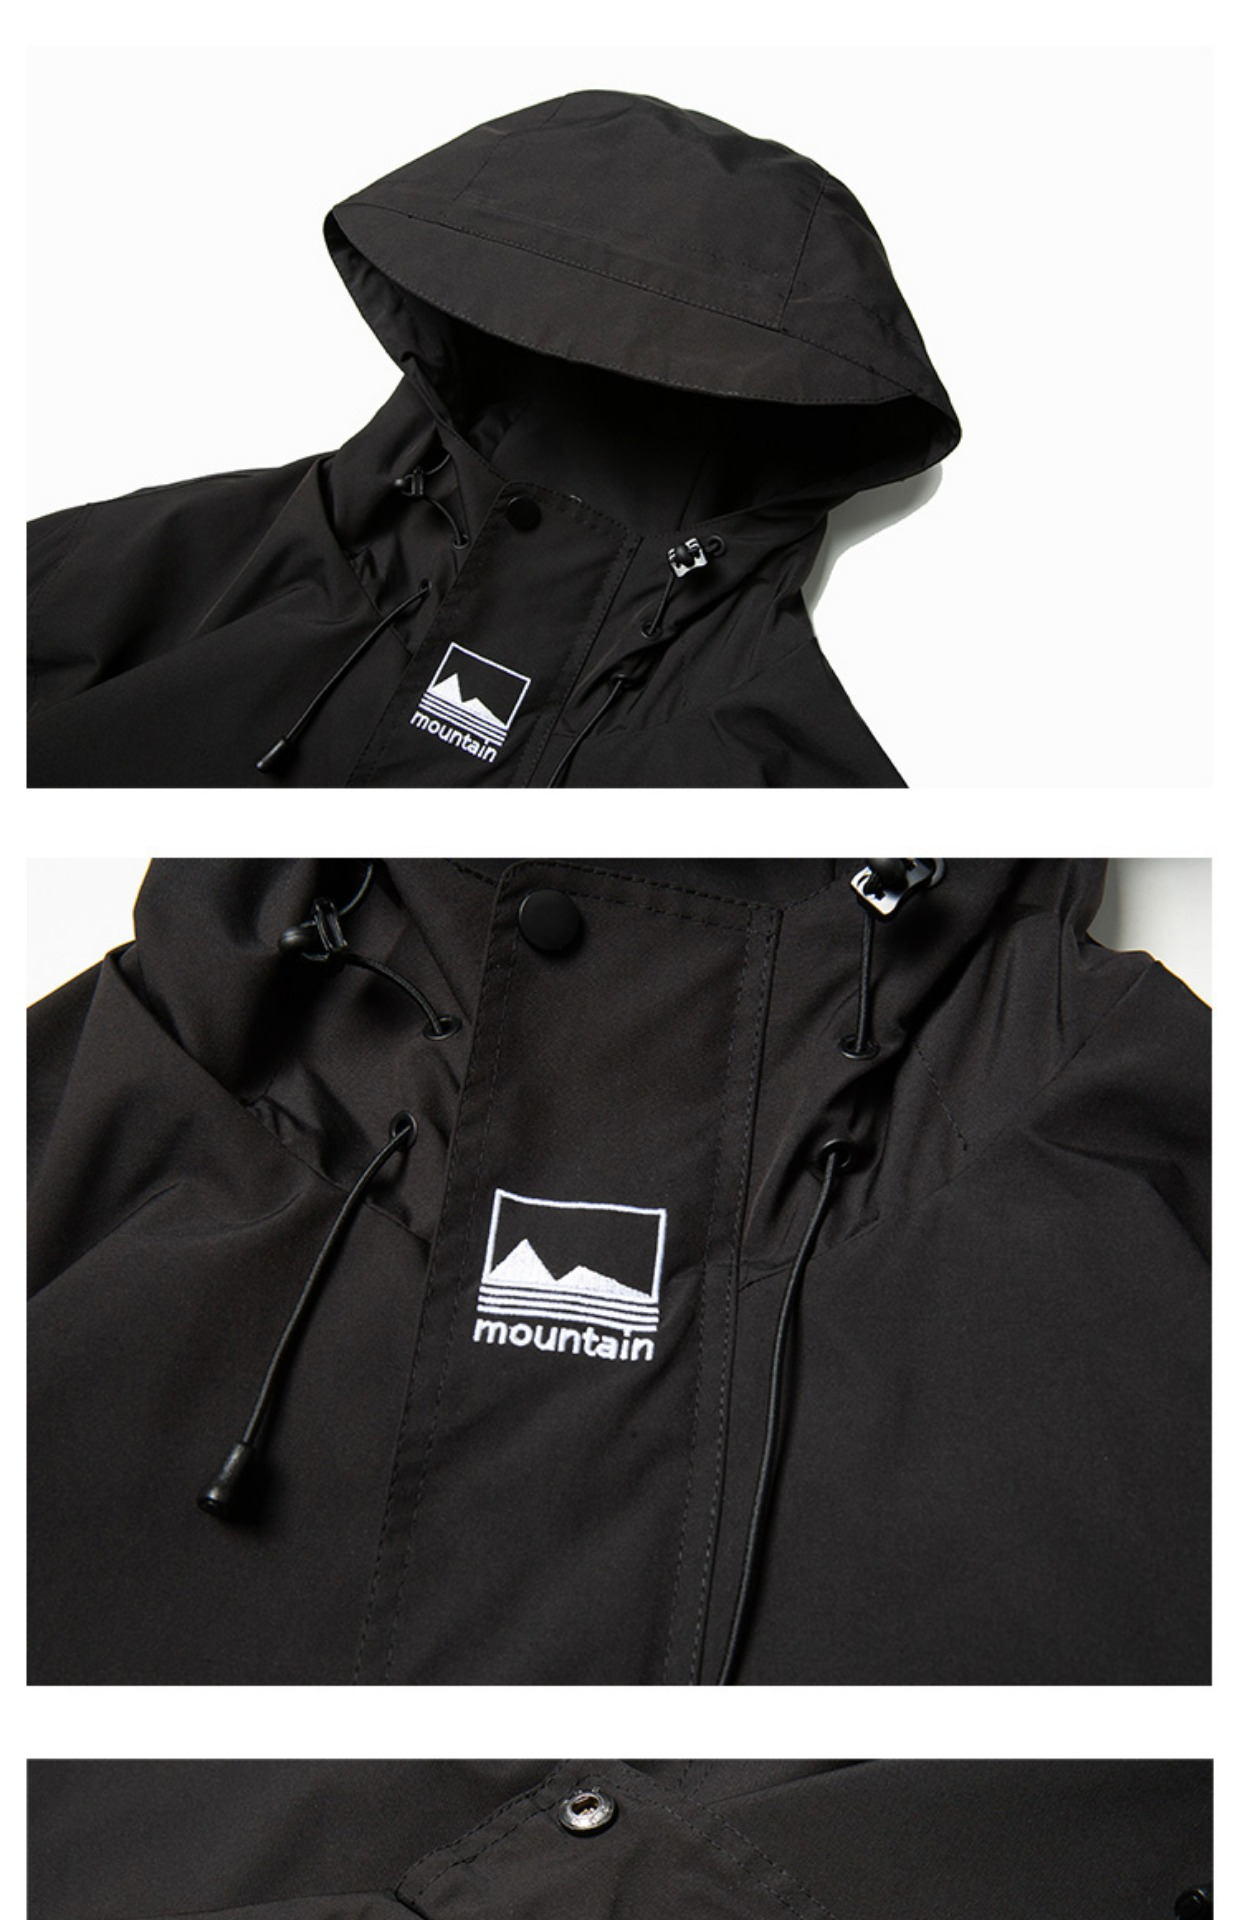 माउंटेन वैली / FS-024 हुड वाली रैश जैकेट